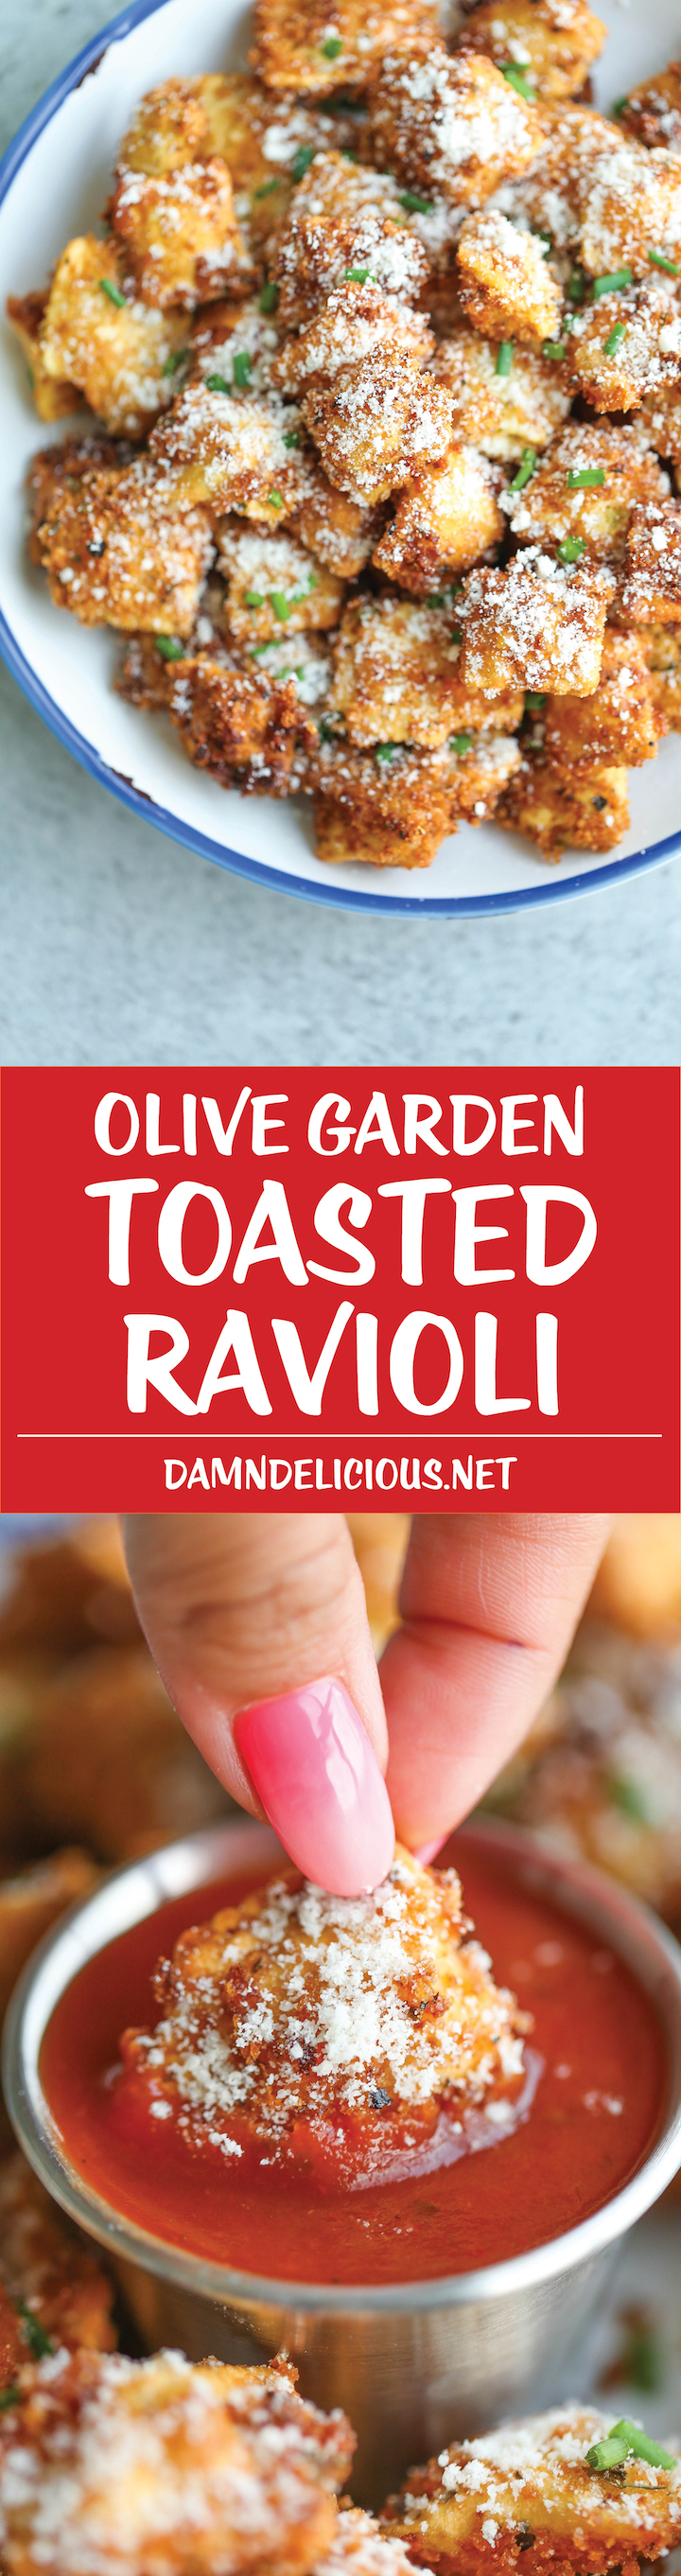 Olive Garden Toasted Ravioli - Damn Delicious